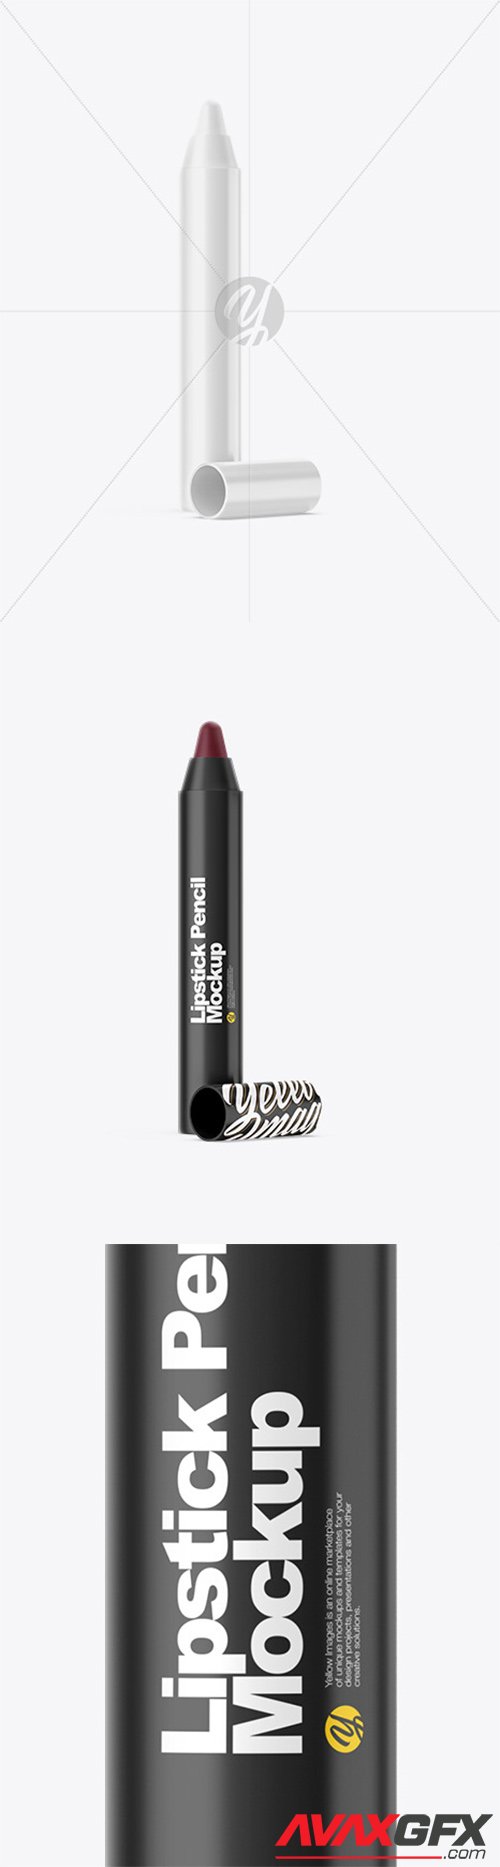 Lipstick Pencil Mockup - Front View 68269